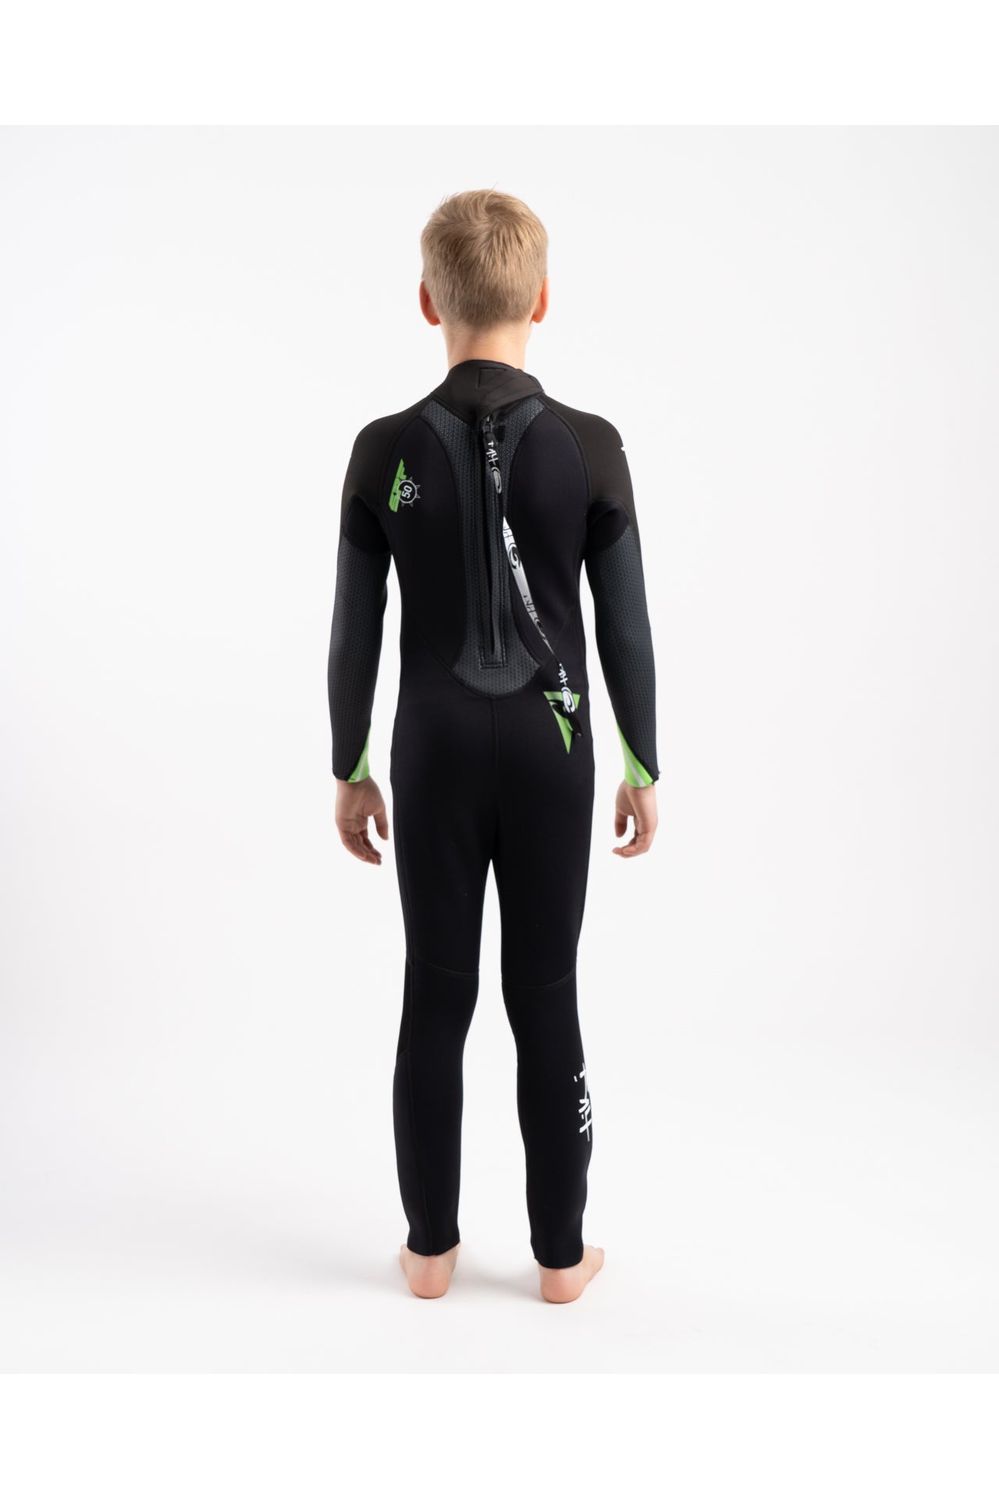 Tiki Tech Junior 3/2 Wetsuit With Back Zip in Black & Green